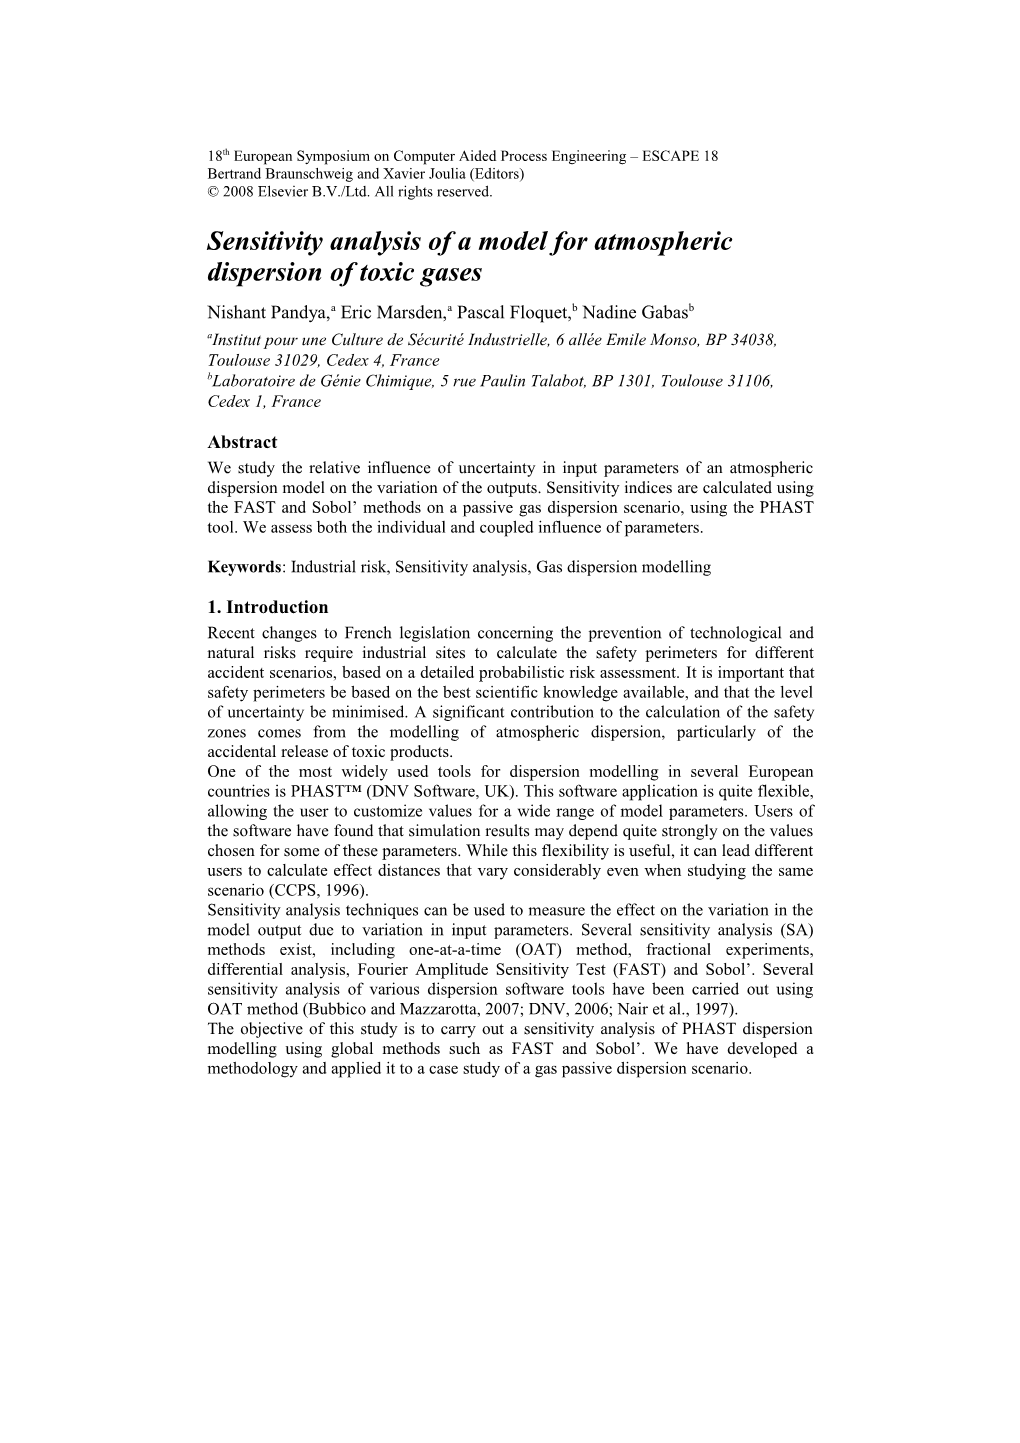 Sensitivity Analysis of an Atmospheric Dispersion Model